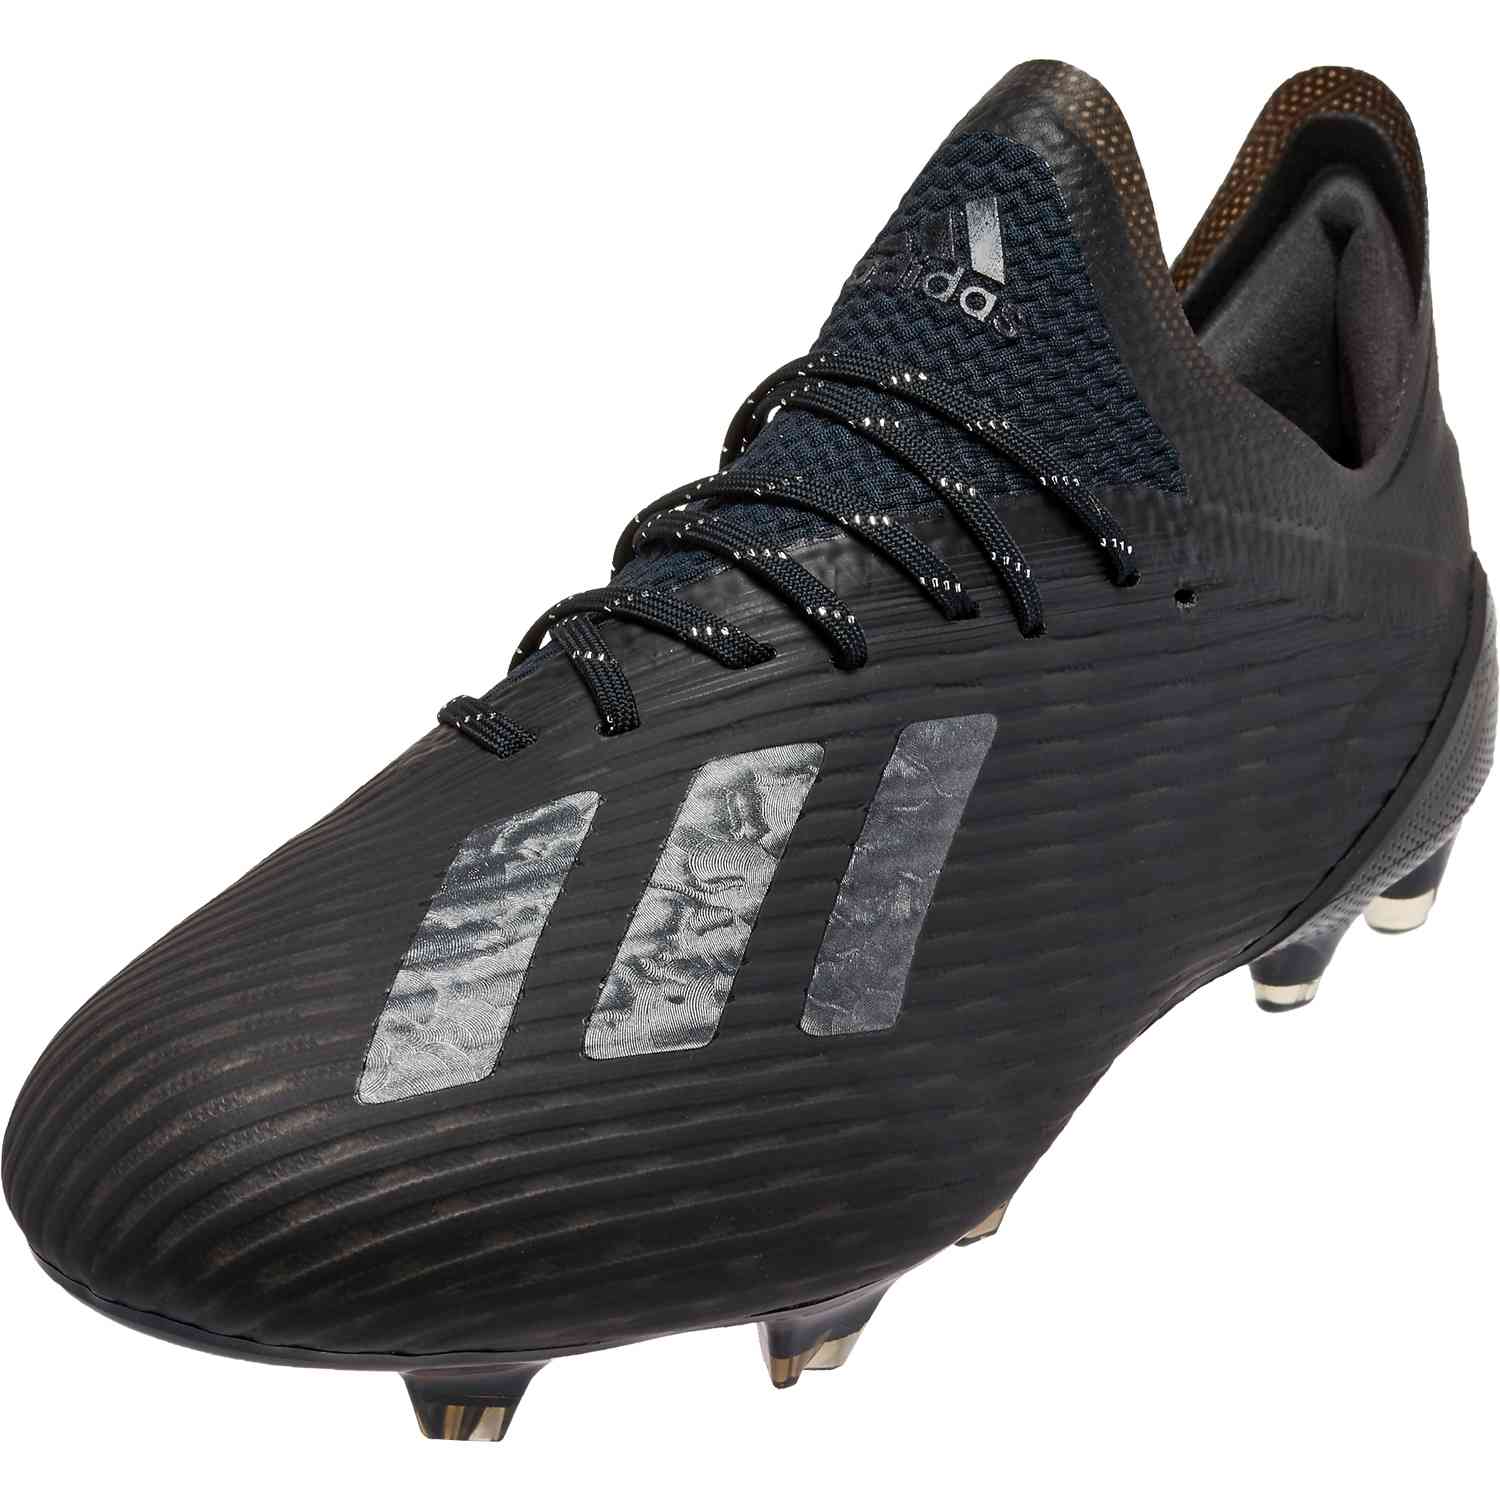 adidas men's x 19.1 fg soccer cleats